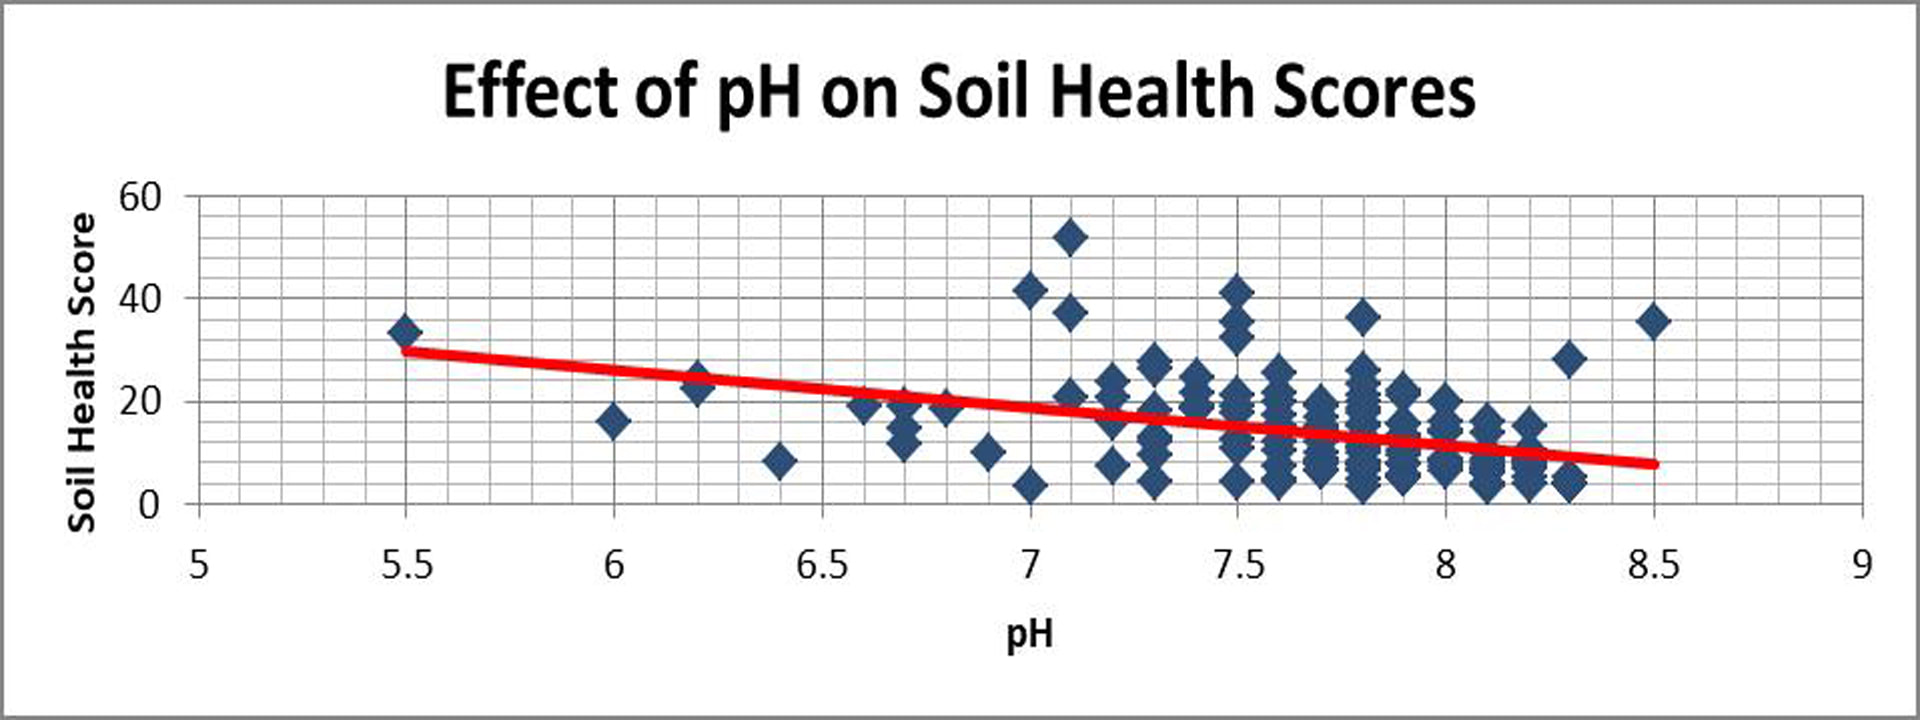 High pH decreases soil health